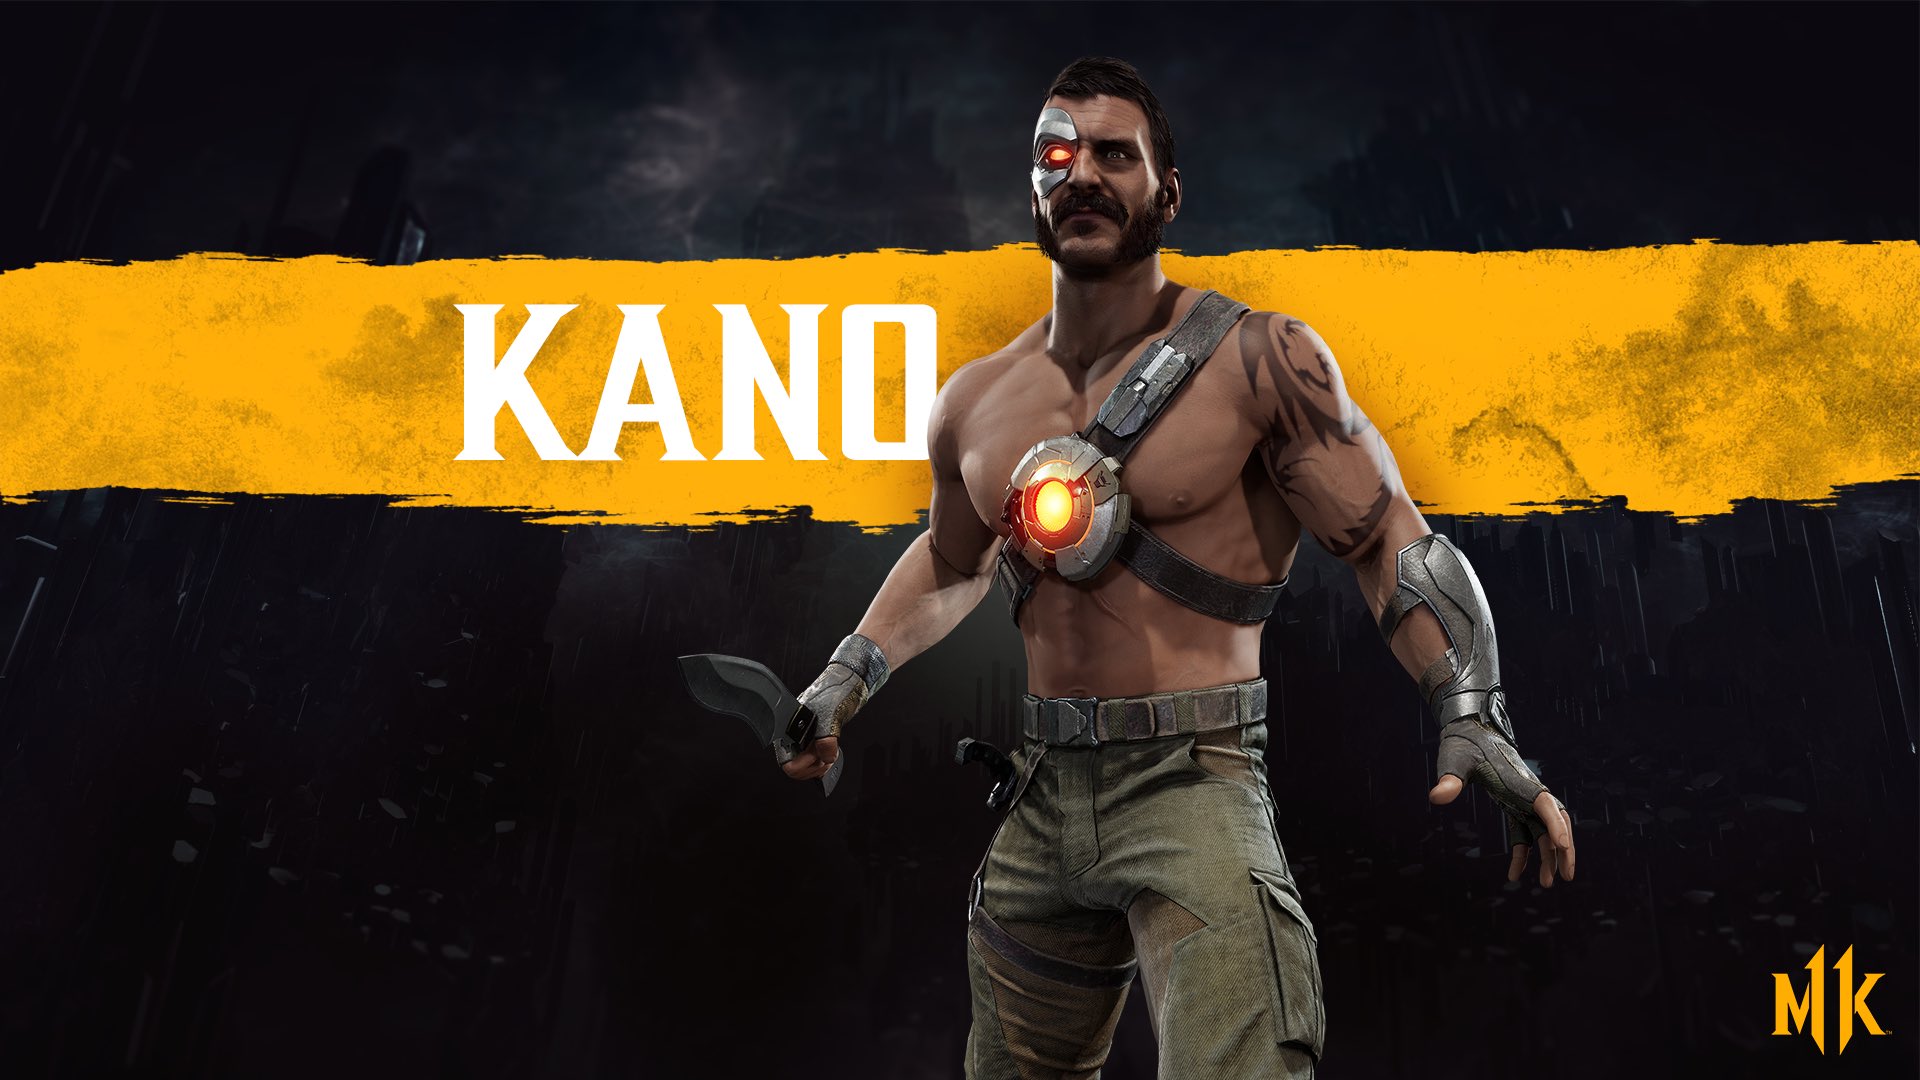 Kano Kosplay - Forums - Mortal Kombat